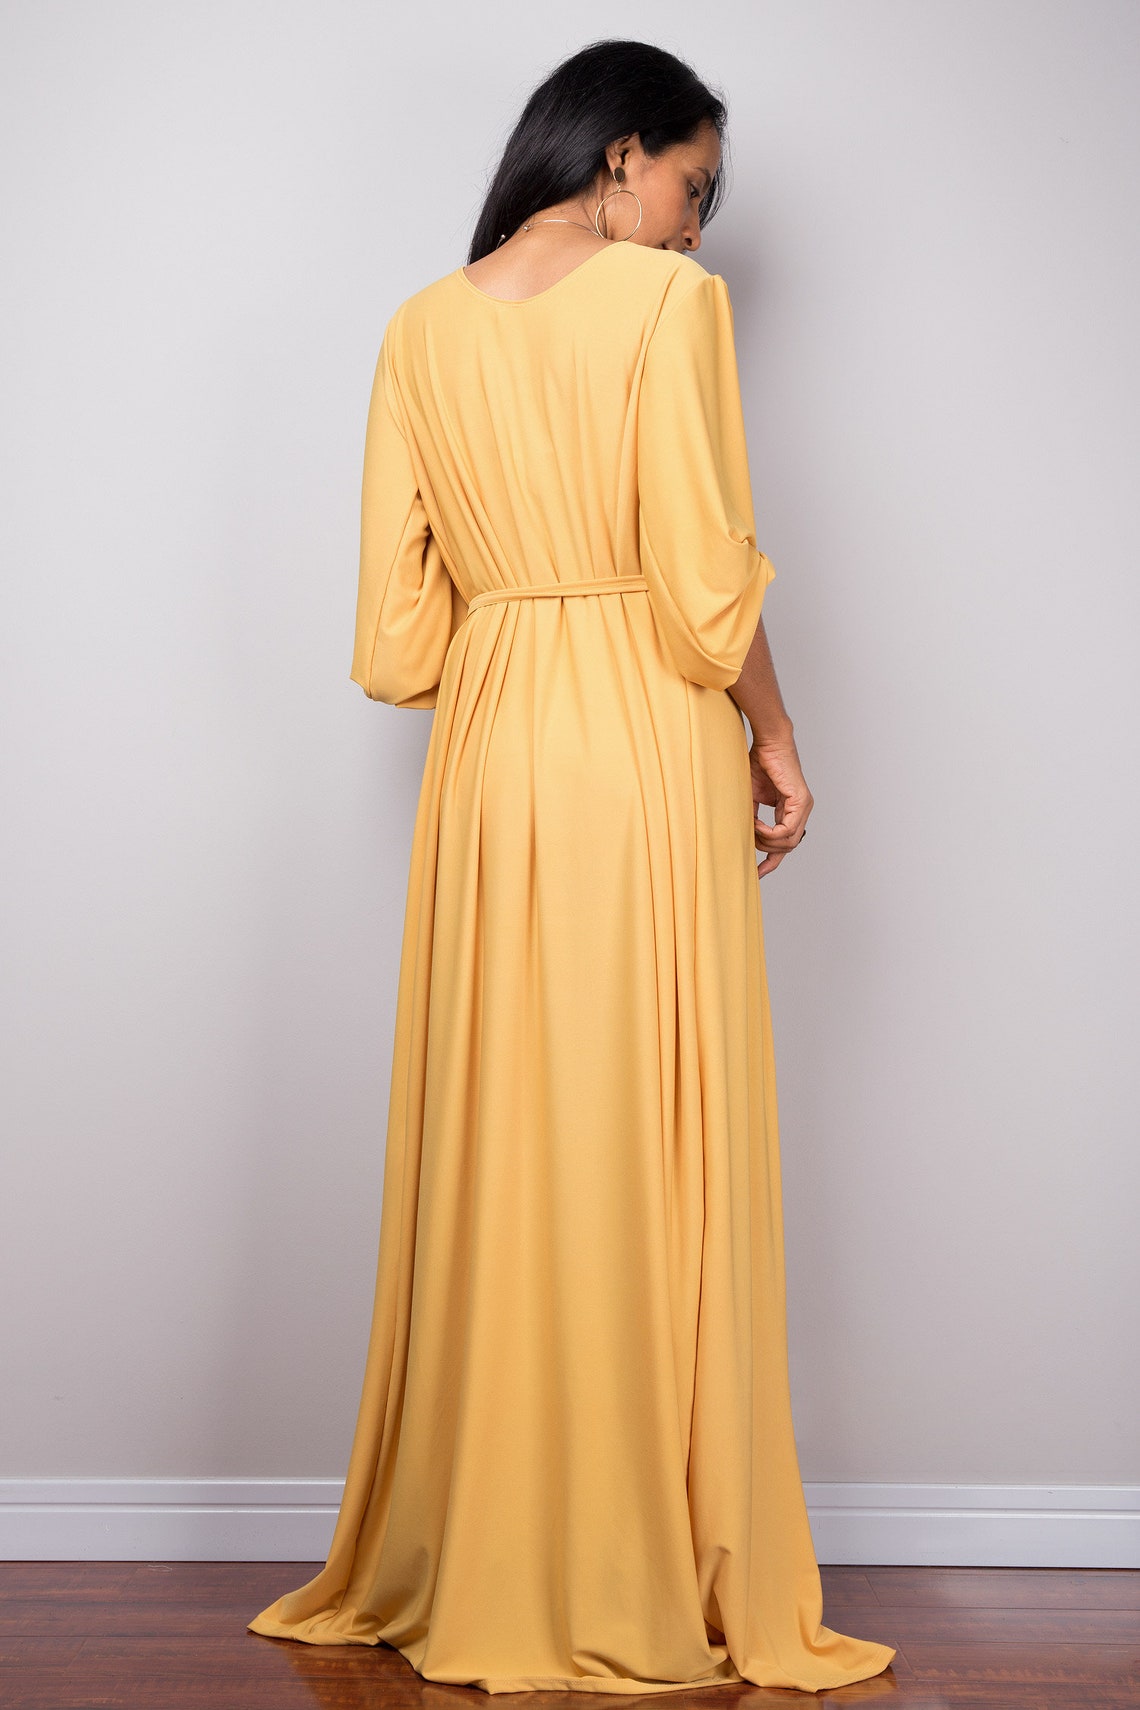 Yellow dress Evening maxi dress dress long sleeves Pleated | Etsy